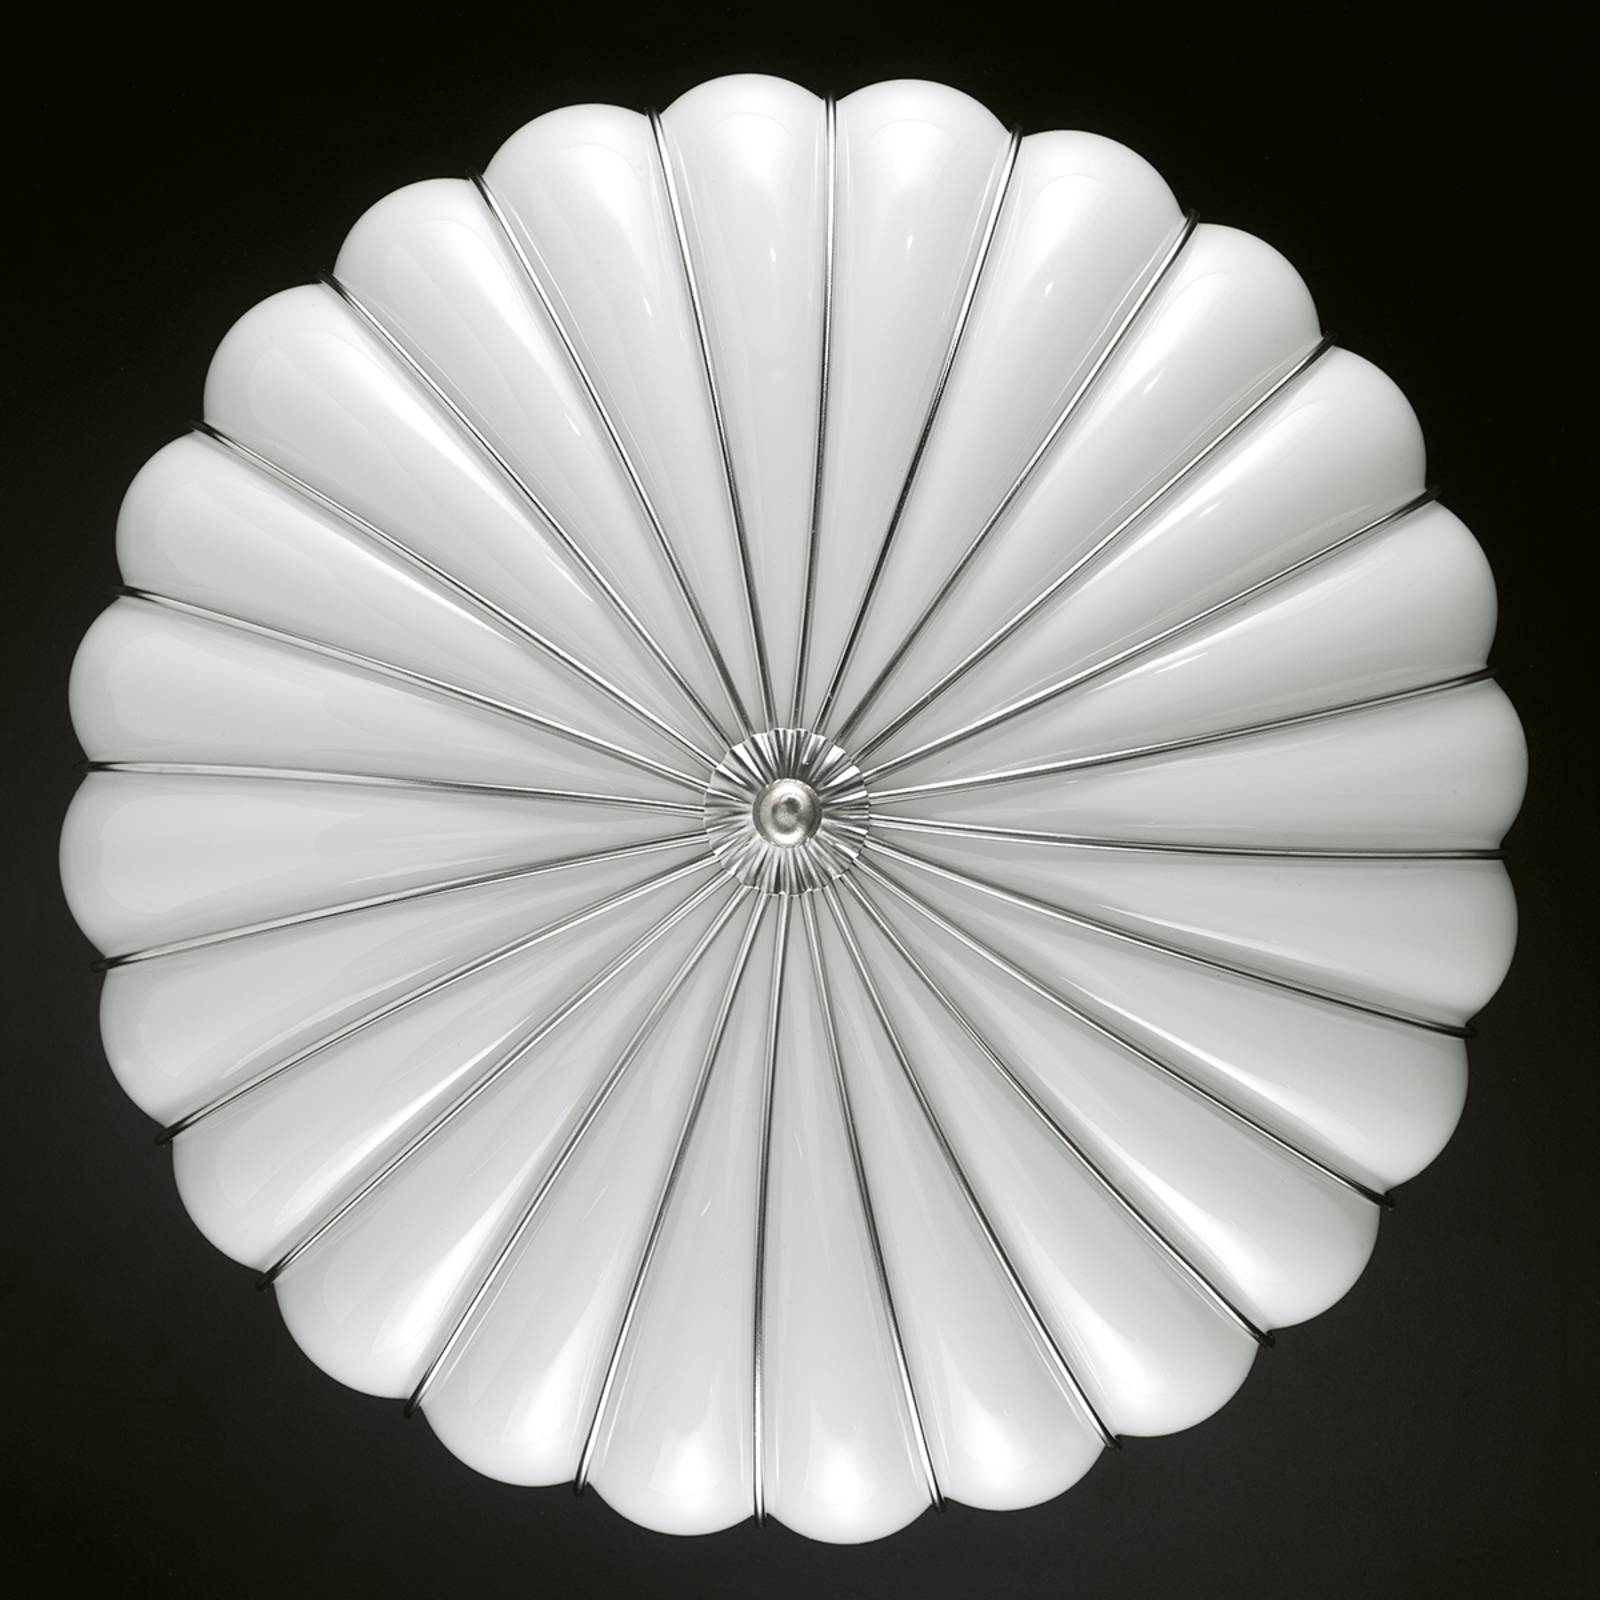 Siru giove mennyezeti lámpa, fehér, 48 cm